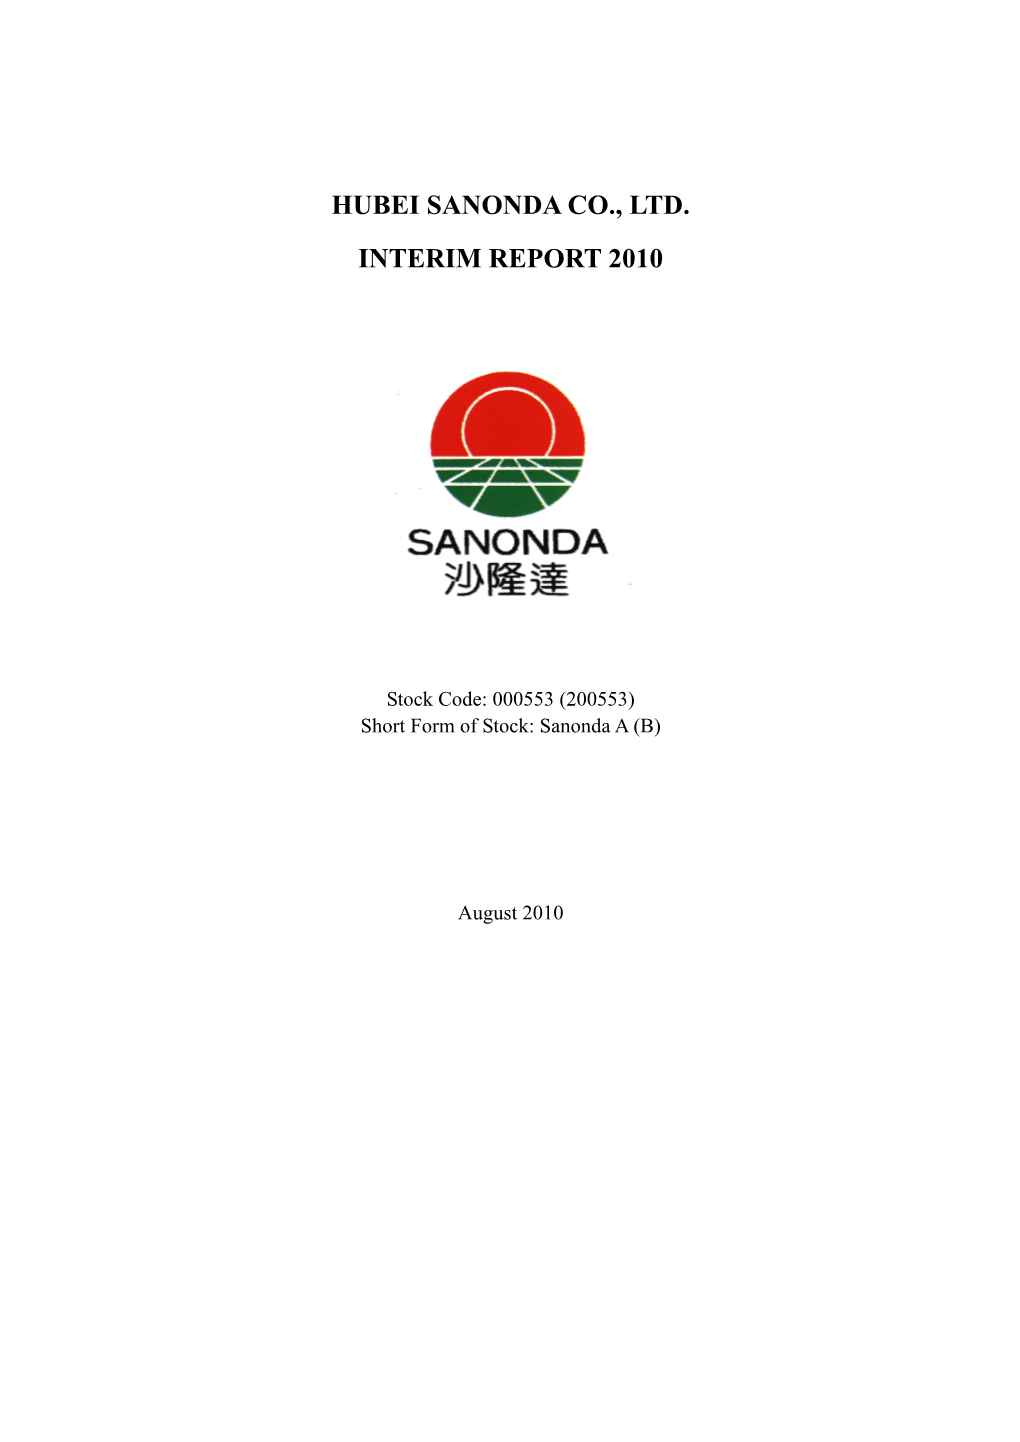 Hubei Sanonda Co., Ltd. Interim Report 2010